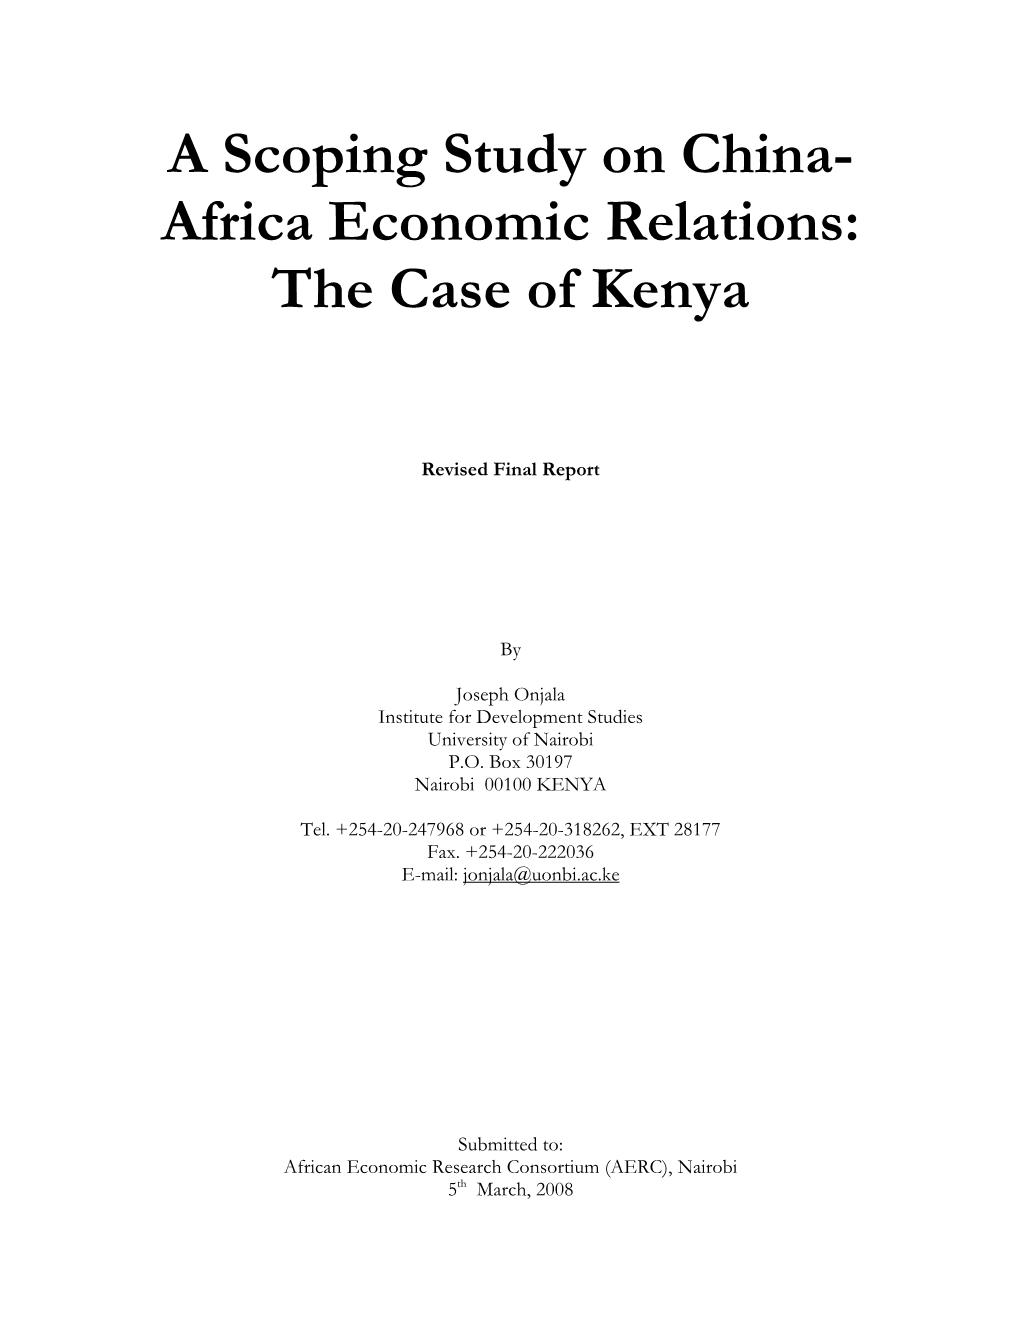 Africa Economic Relations: the Case of Kenya